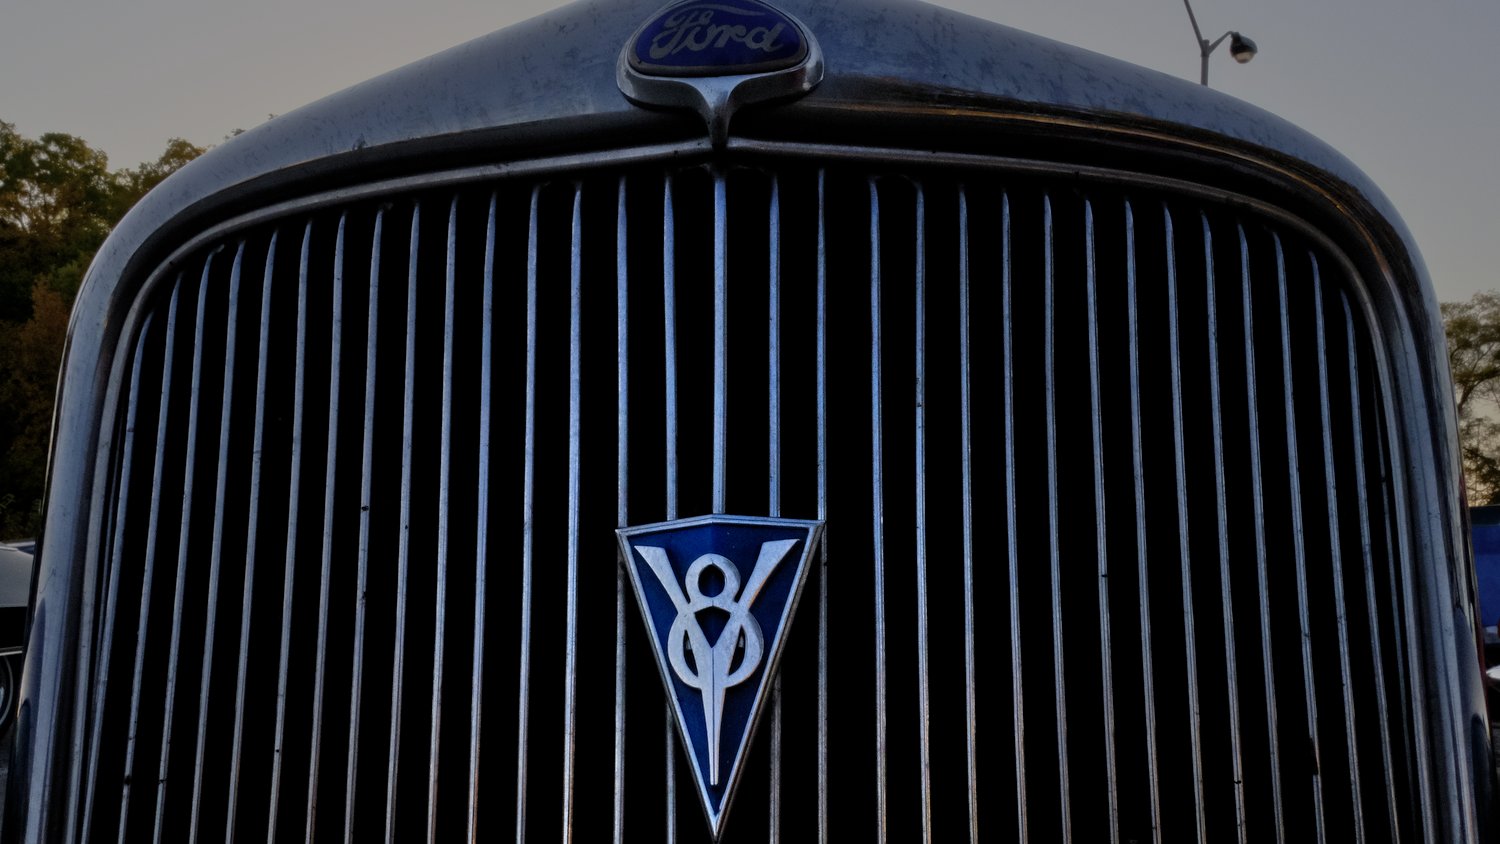 Grille and emblem of Ford V8.